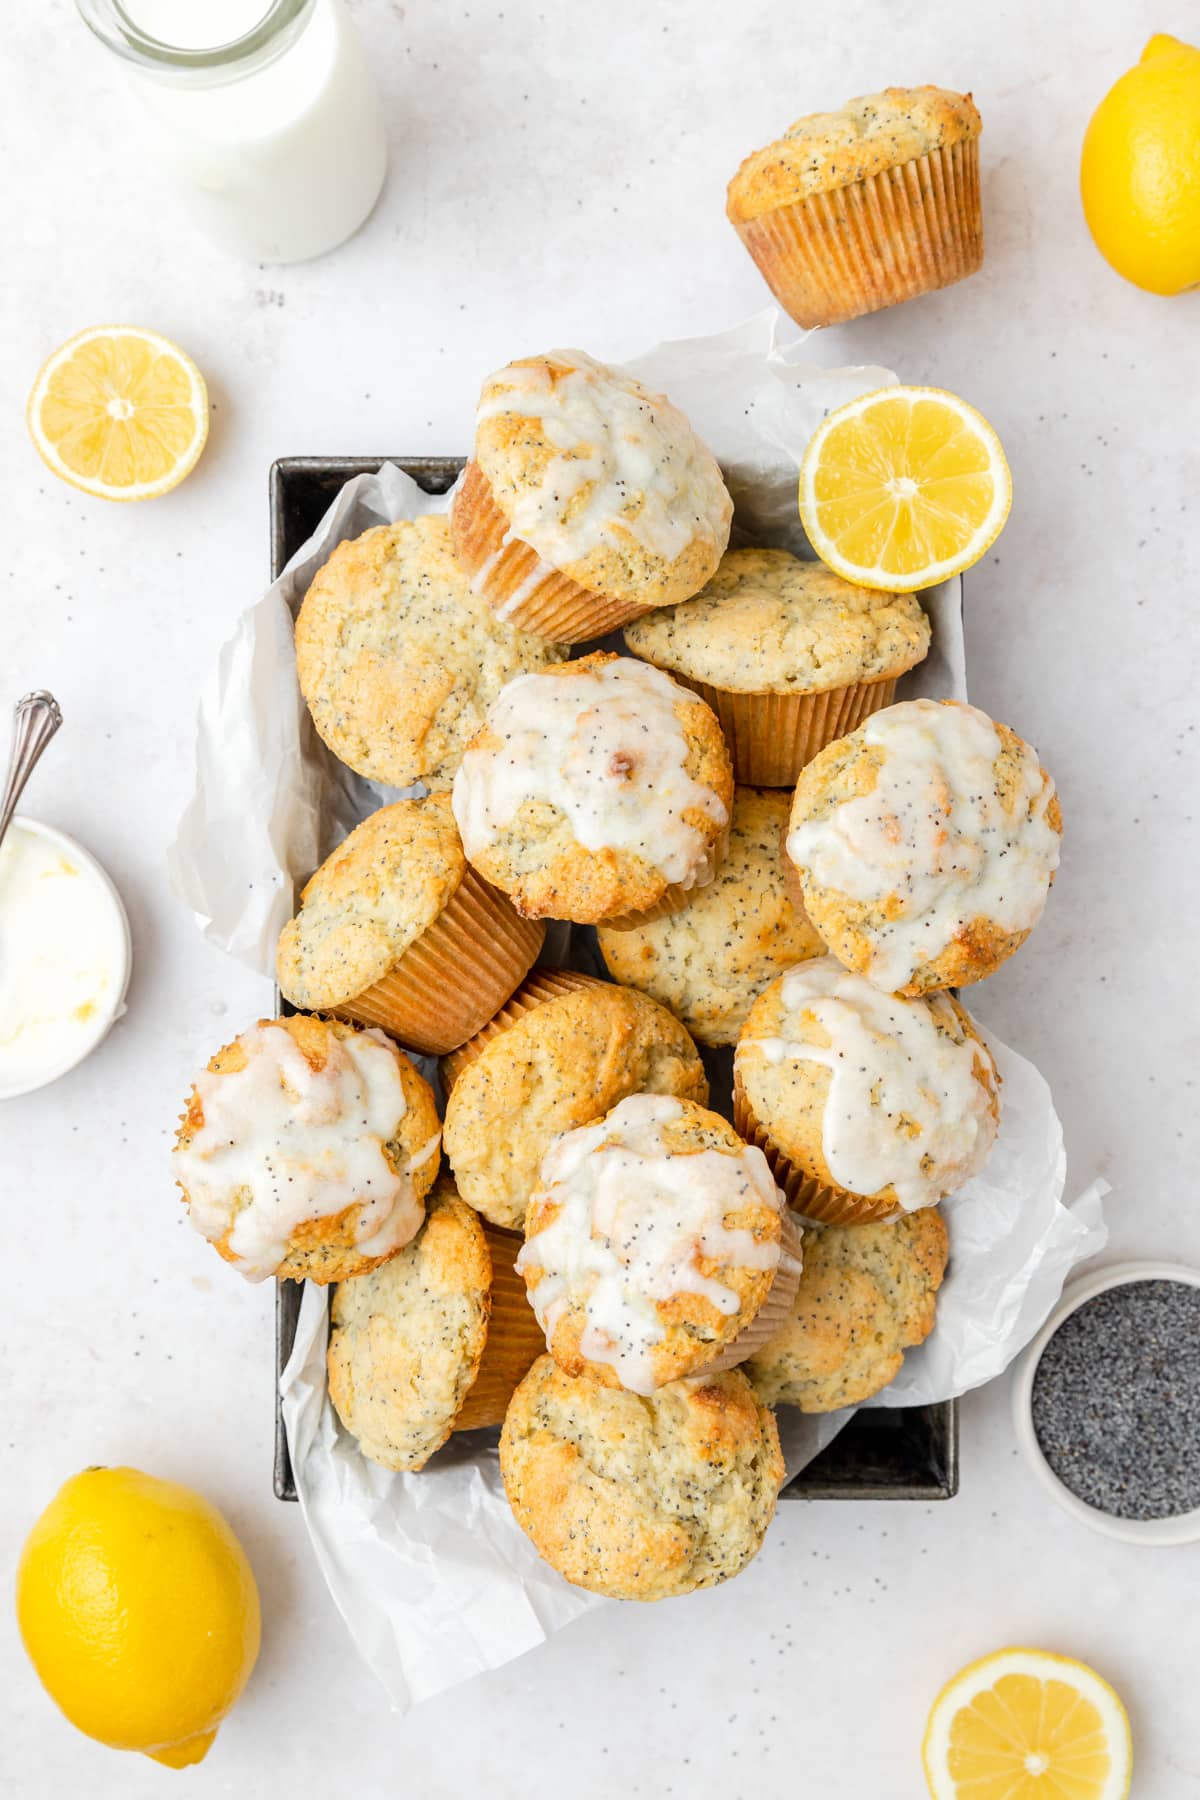 tray of lemon poppy seed muffins with lemon glaze.